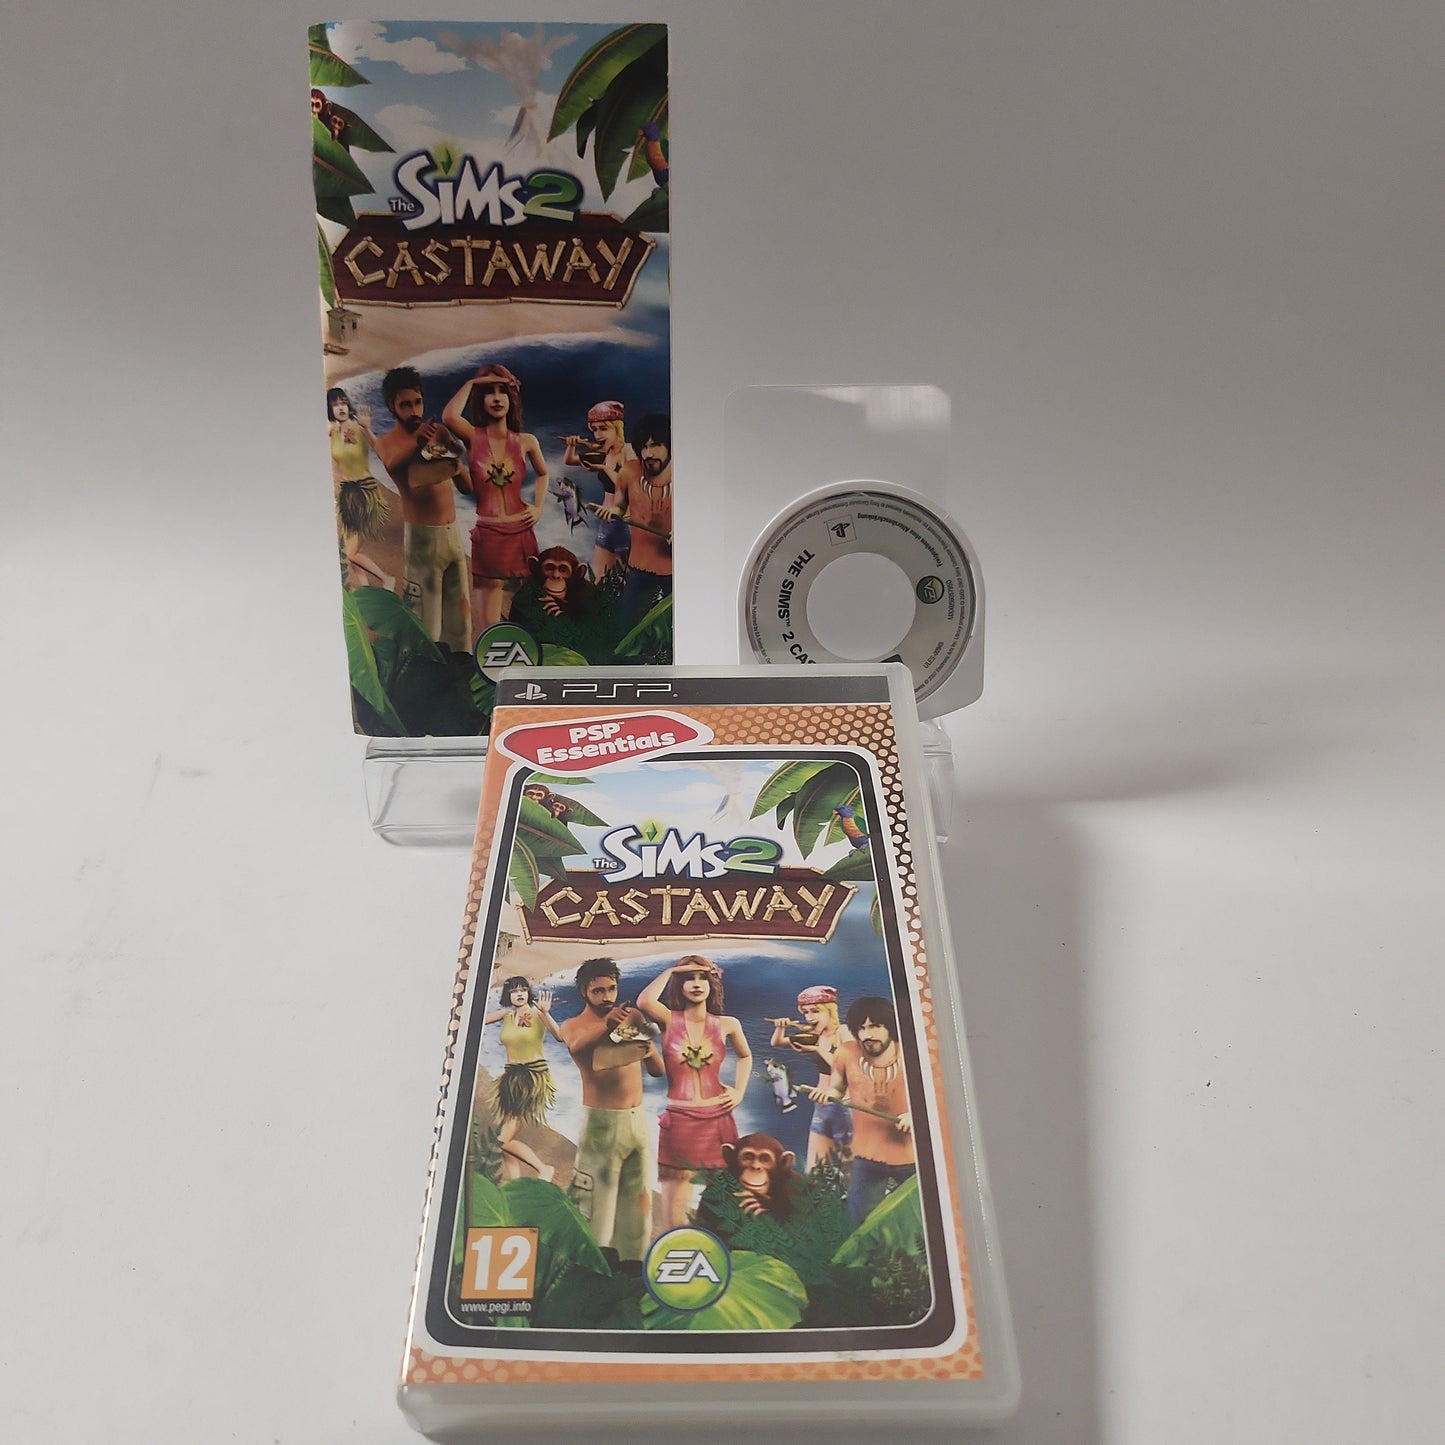 Sims 2 Castaway Essentials PSP